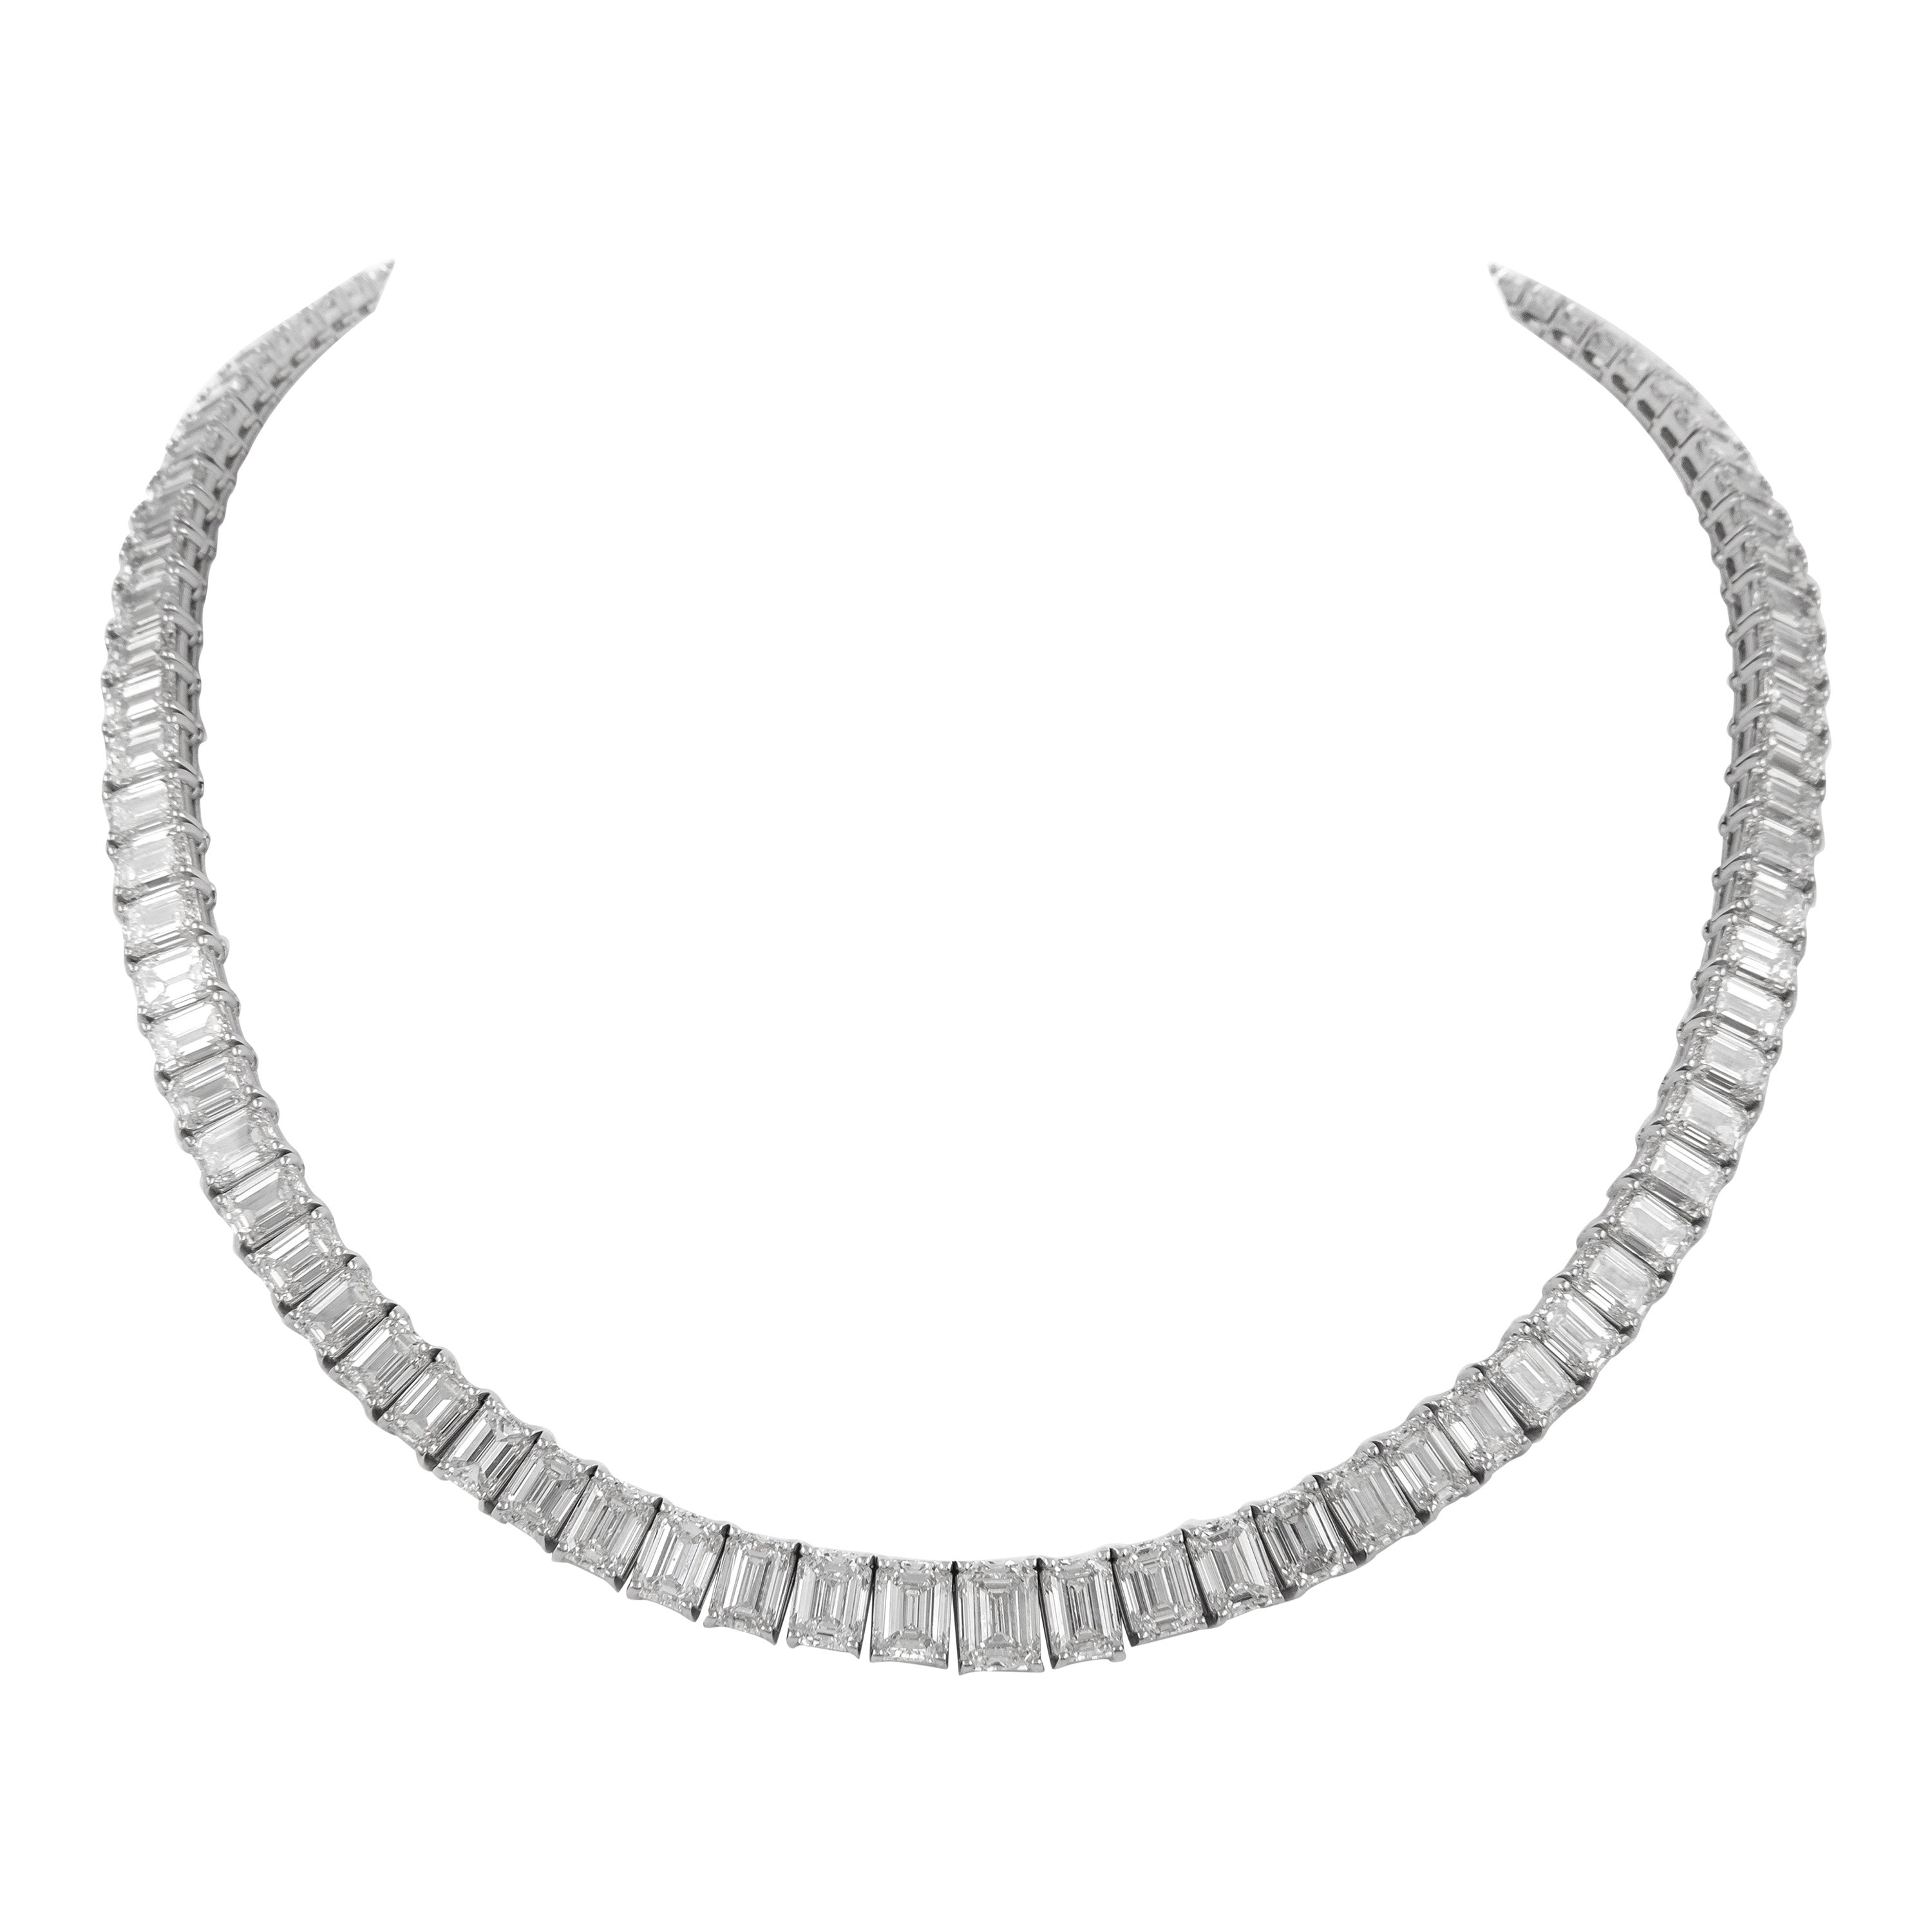 Alexander GIA 55.79 Carat Emerald Cut Diamond Tennis Necklace 18k White Gold For Sale